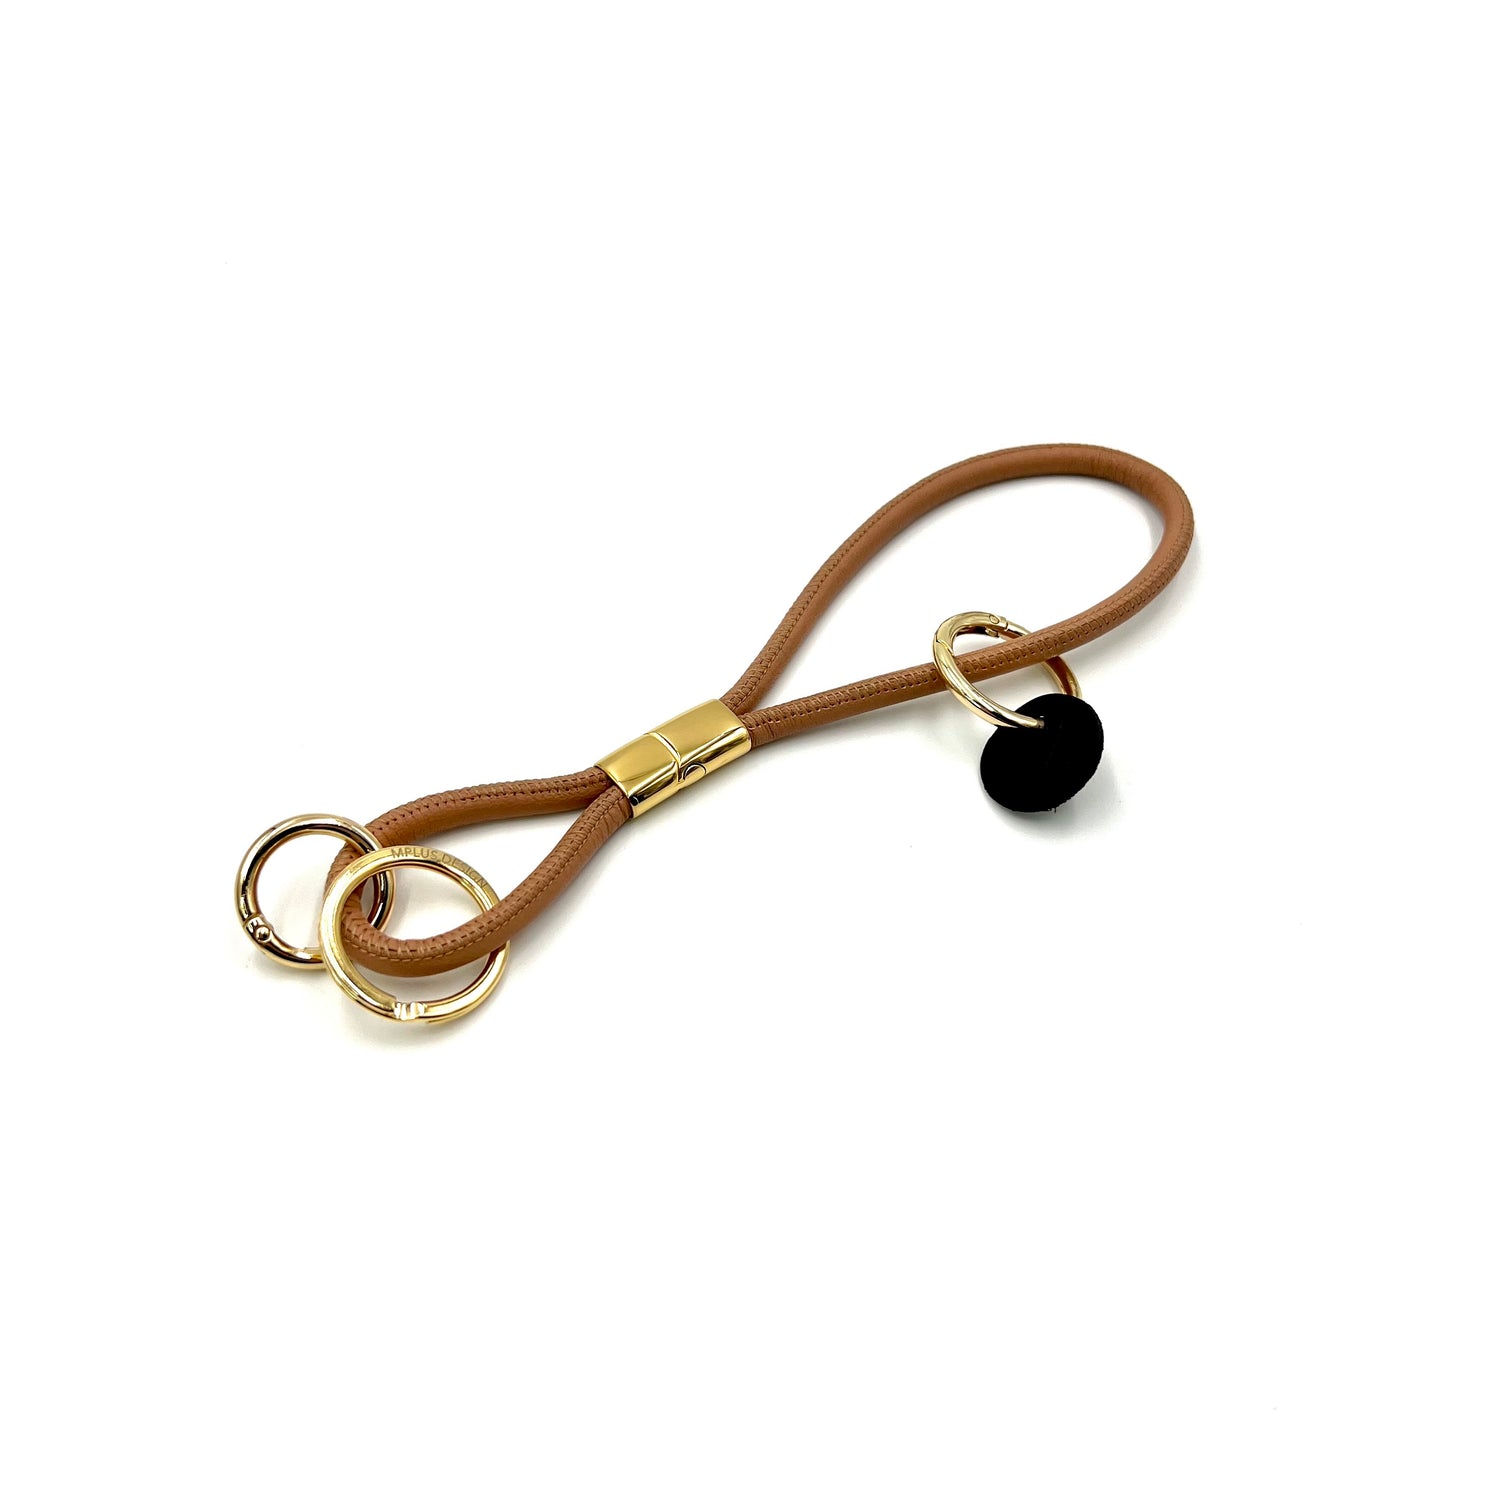 Key Bracelet Schlüsselanhänger Leder teilbar Armband Trageschlaufe Autoschlüssel Schlüssel Accessoire Nude Gold